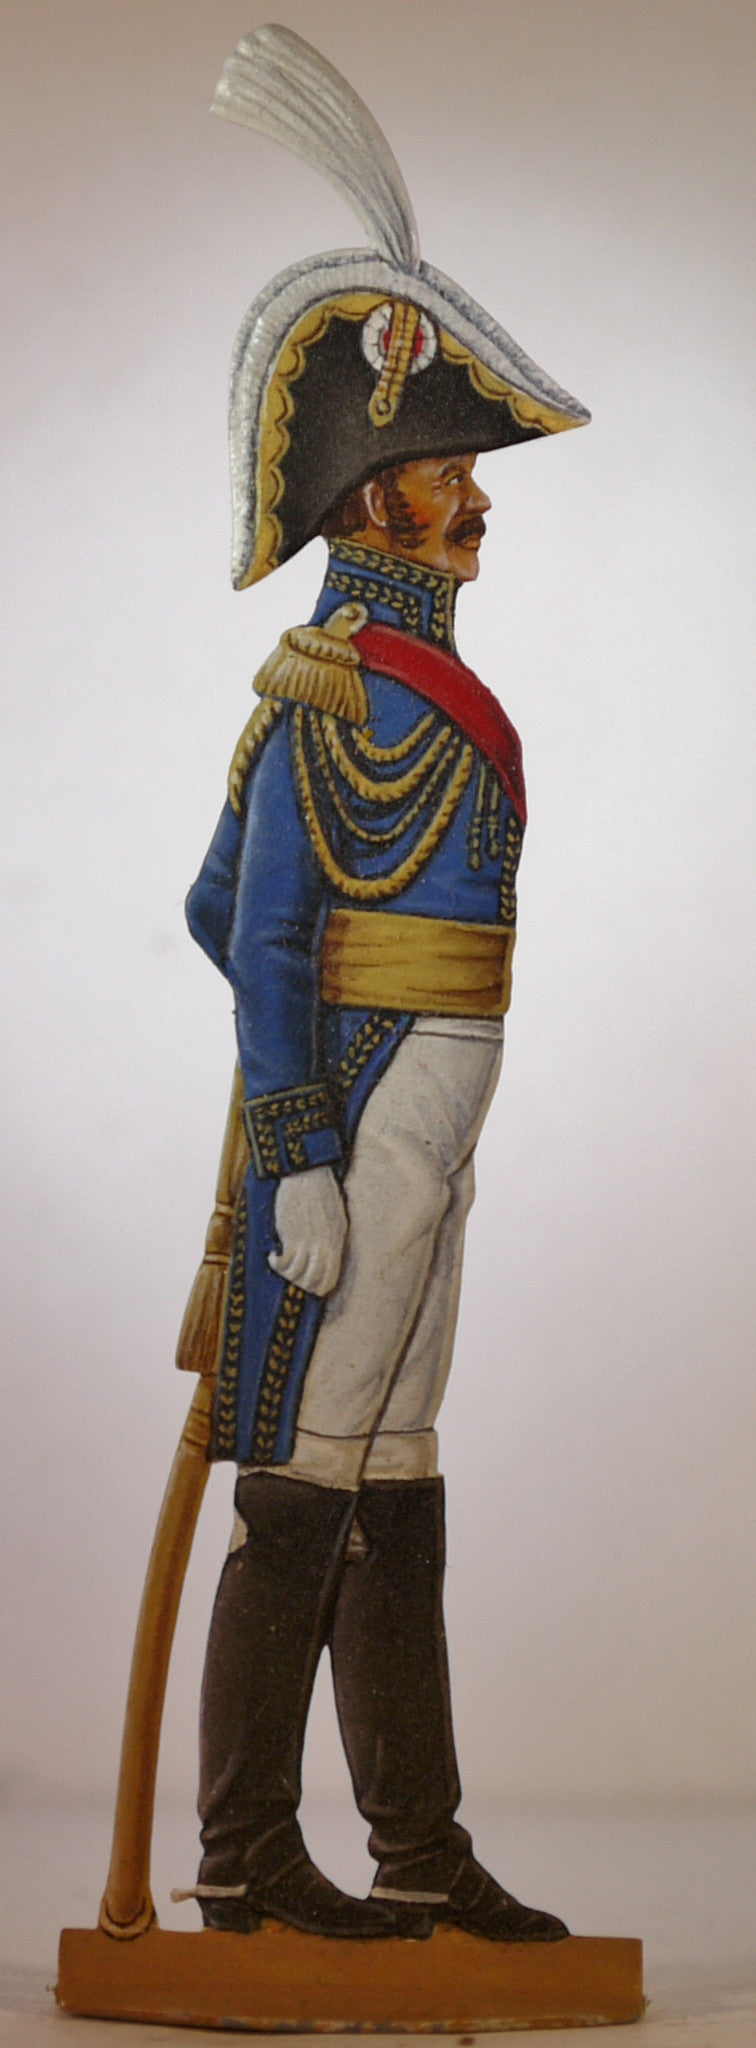 Marshal Rapp - Glorious Empires-Historical Miniatures  